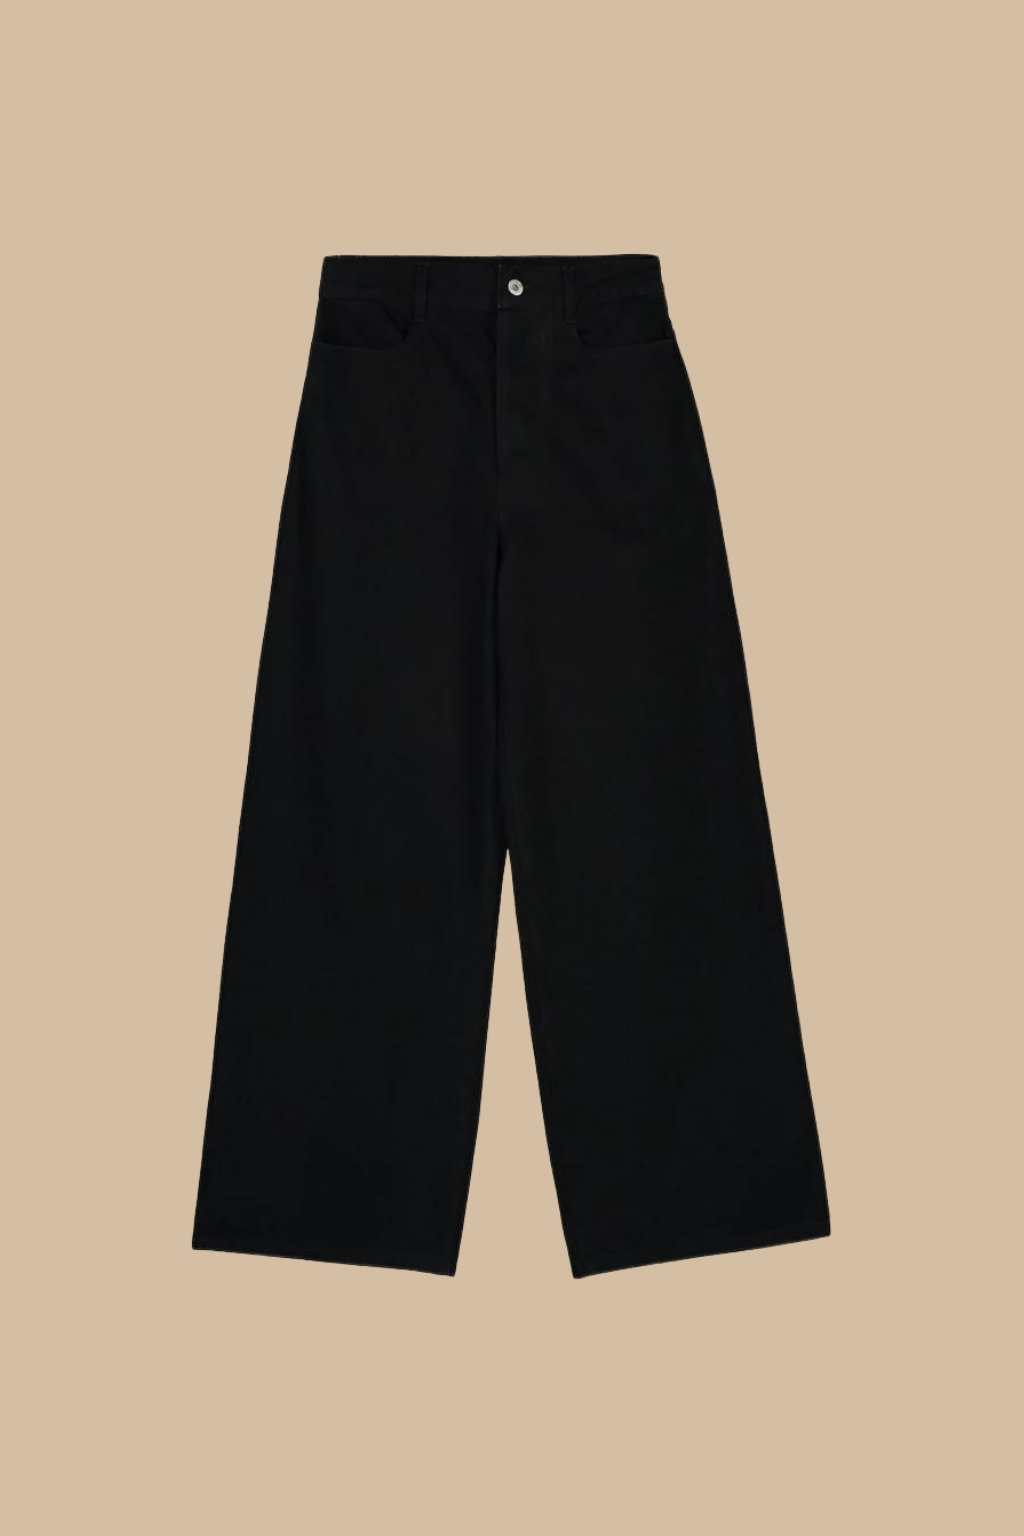 Sailor Jeans in Black Denim Organic Cotton